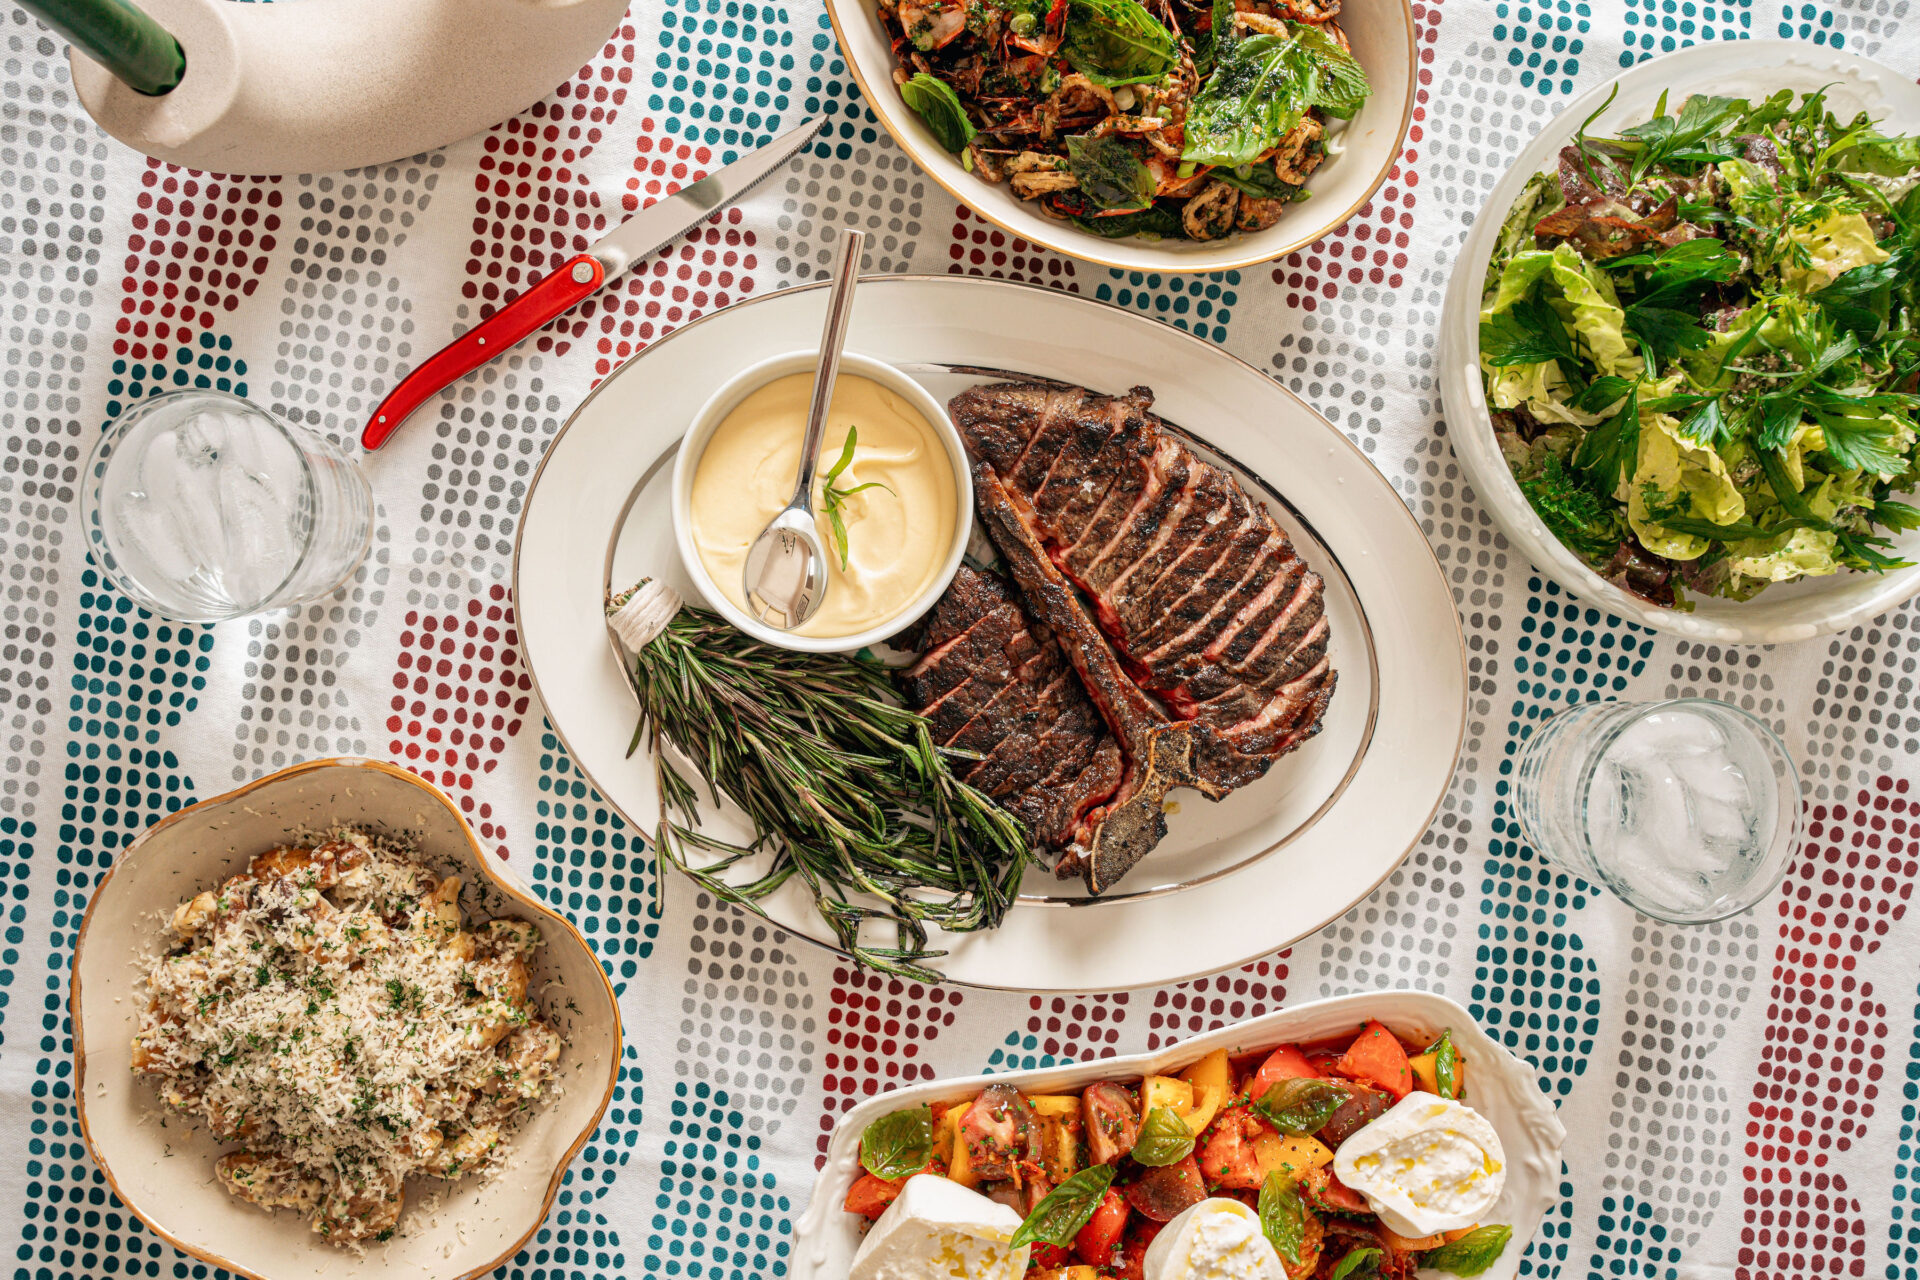 Joe Cash's Father's Day feast featuring steak, shrimp, salad, and potaotes